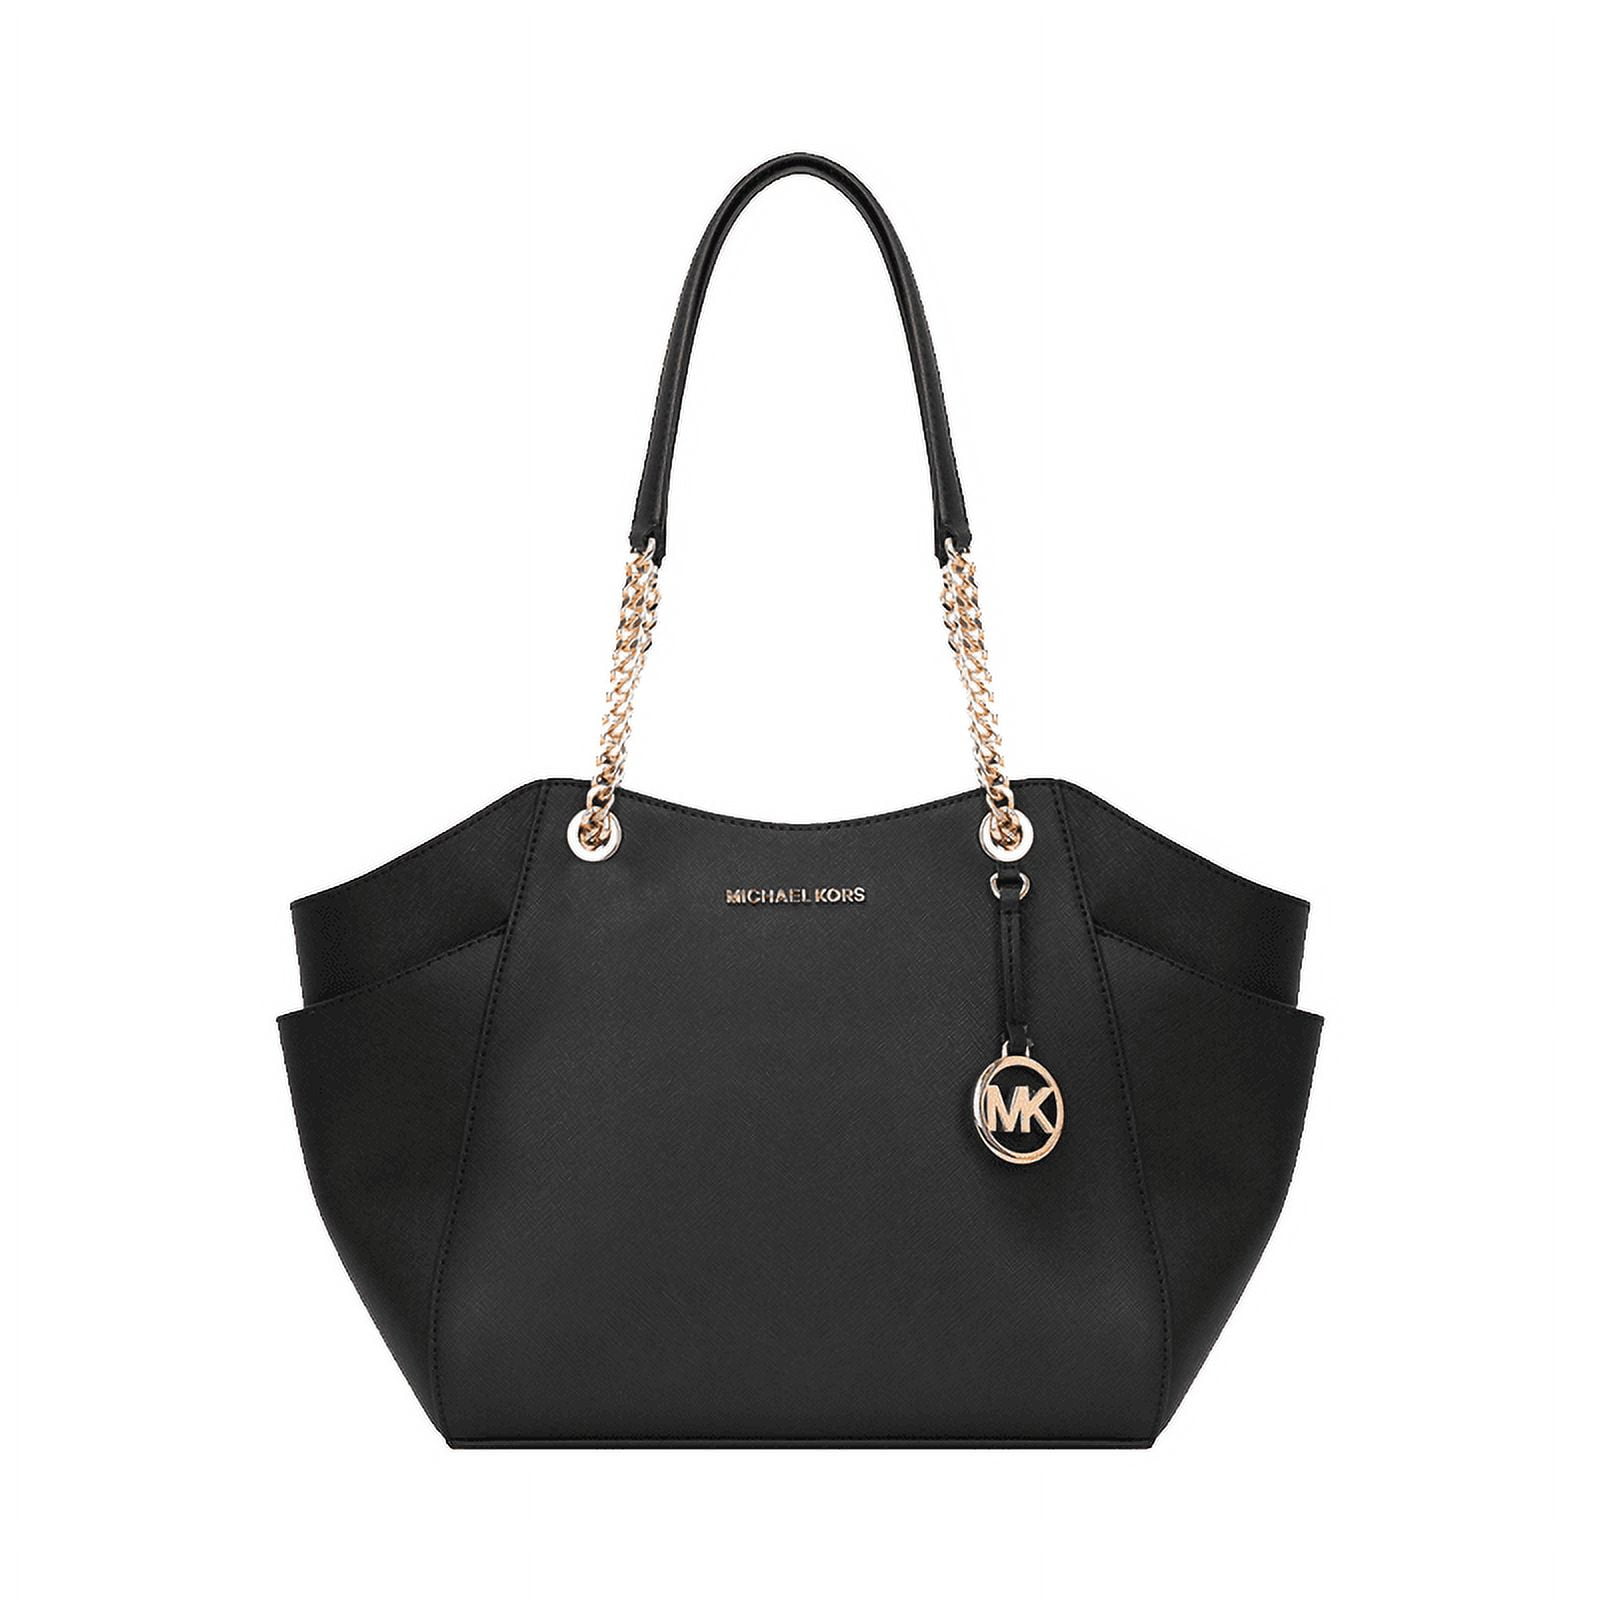 Michael Kors Handbags Shop Michael Kors for jet set luxury - designer  handbags, watches, jewelry, shoes #michaelkor…